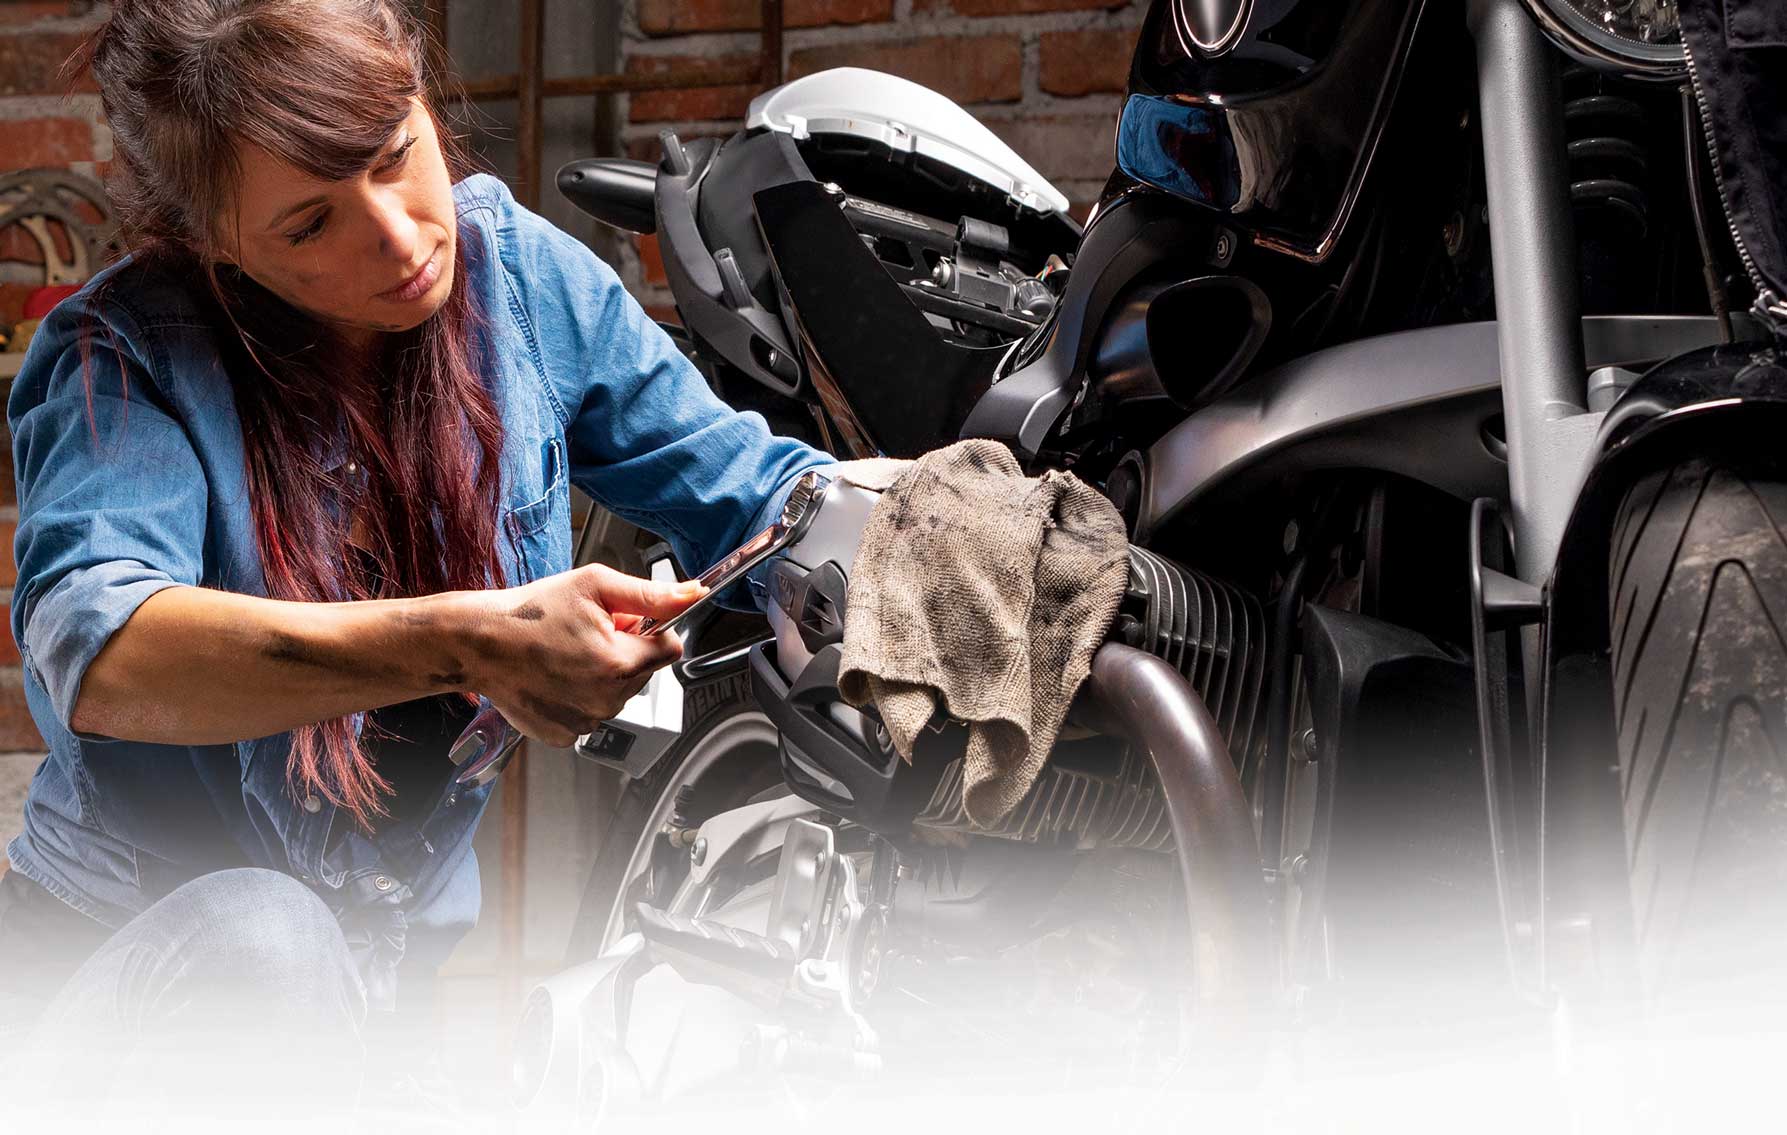 Woman repairs a motorcycle.